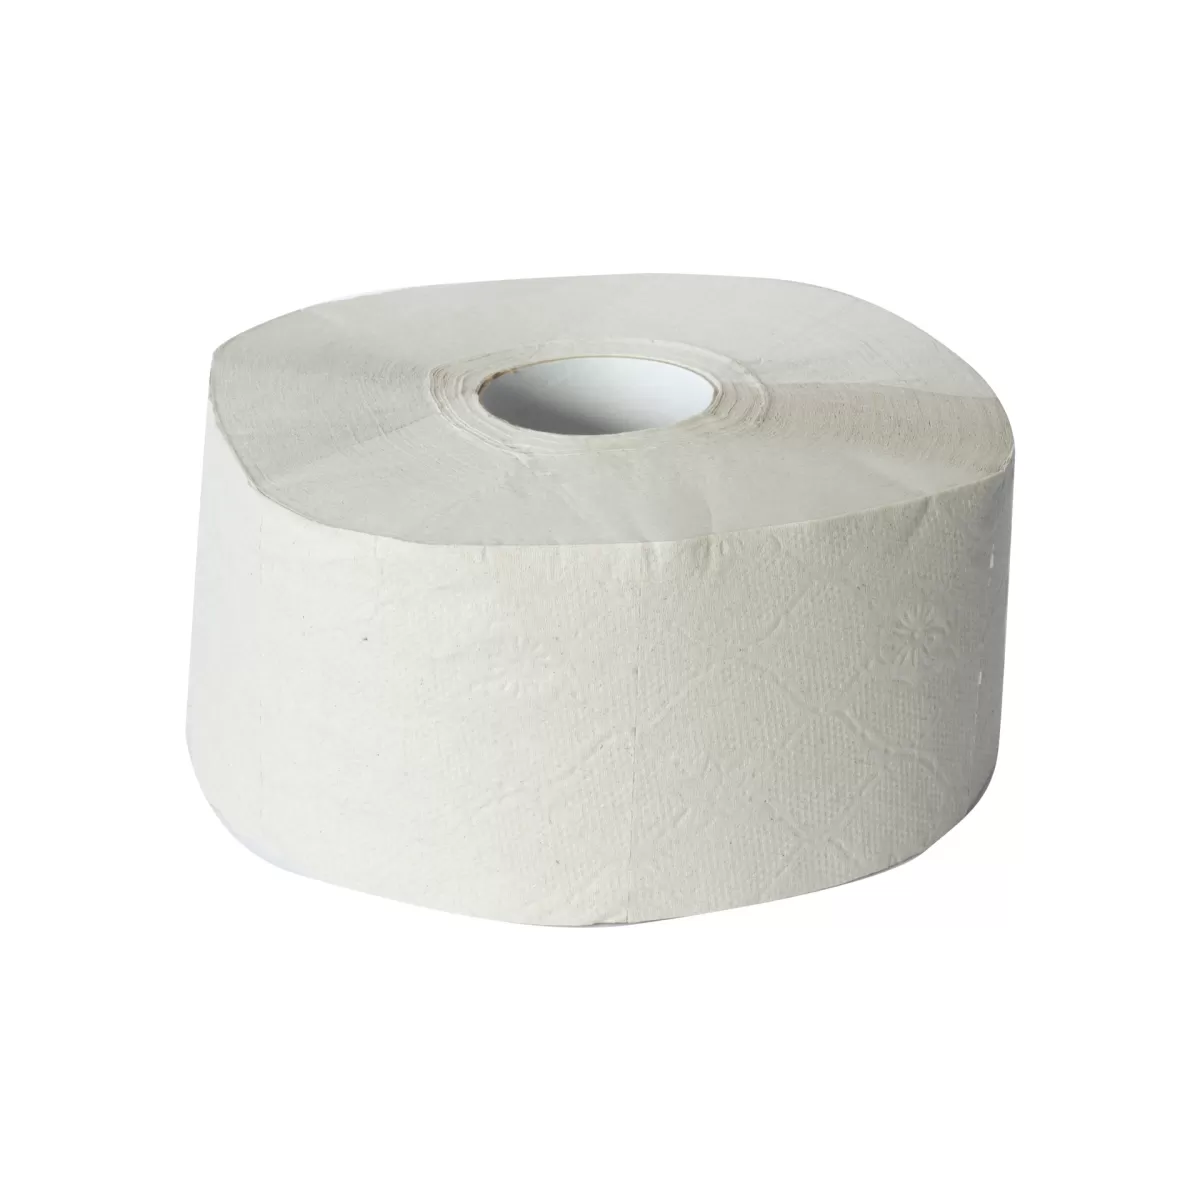 Тоалетна хартия Джъмбо, рециклирана, трипластова, 400 g, 12 броя